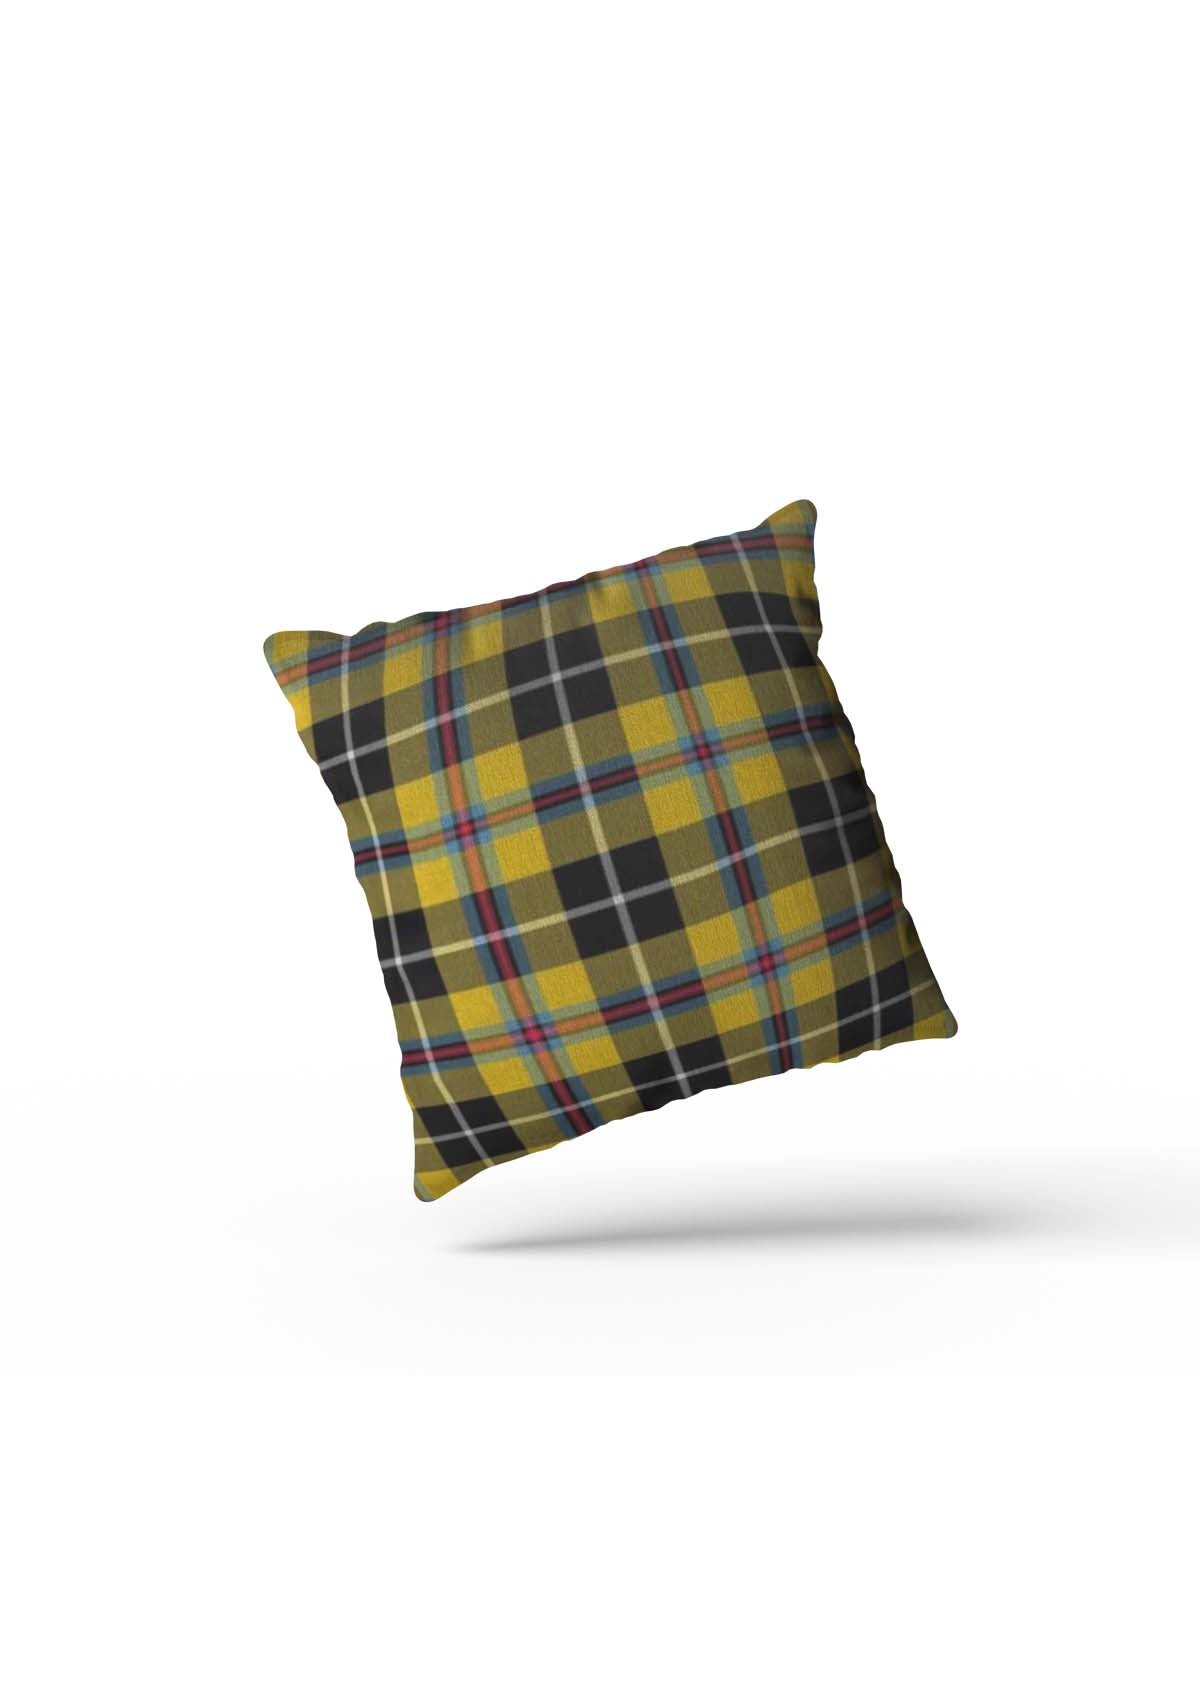 yellow and blue tartan check cushion cover